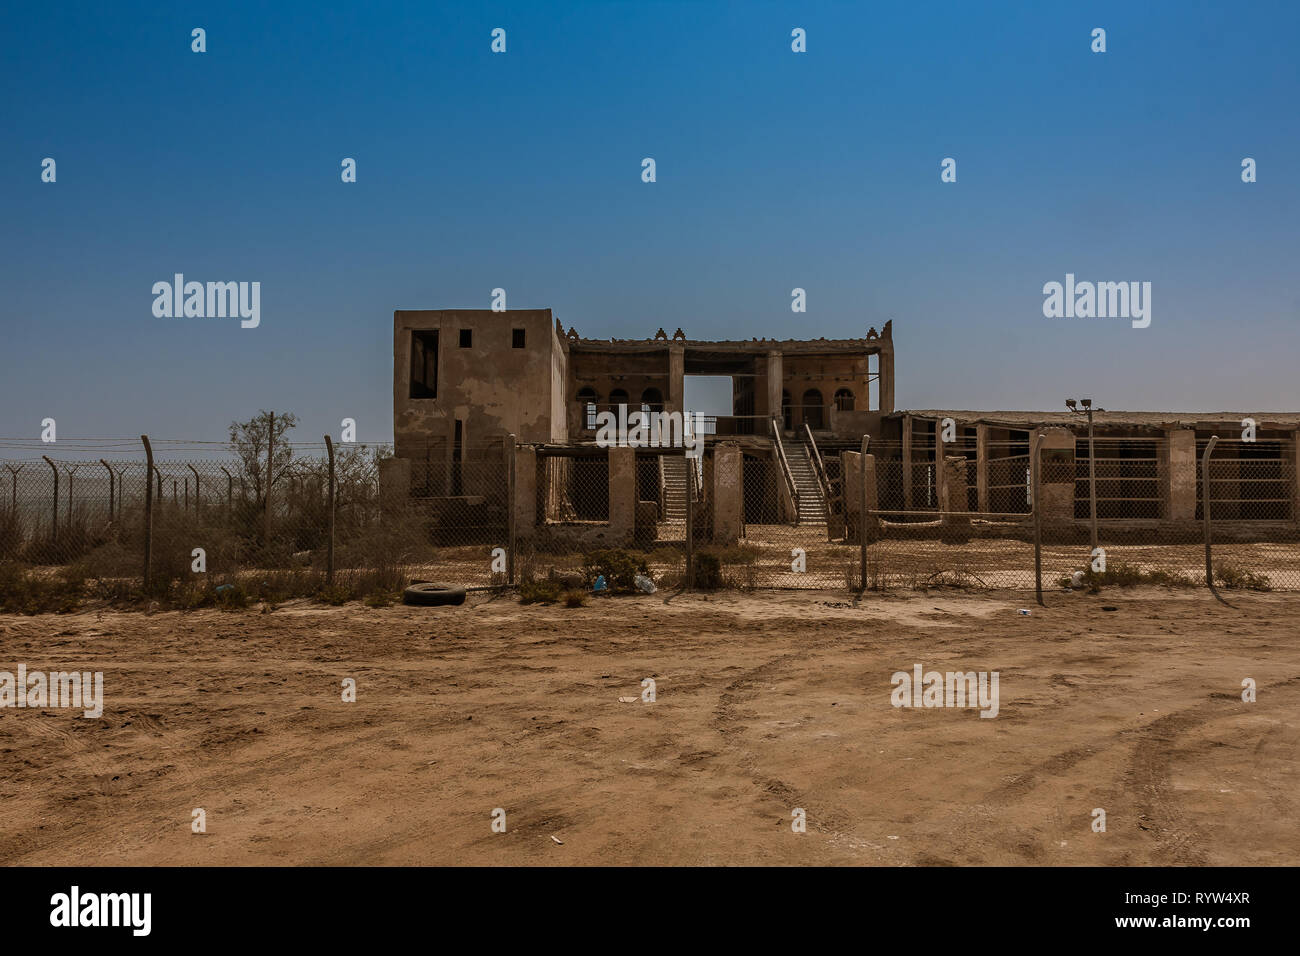 The ruins of the former Ottoman sea port and customs in Al Ahsa, Saudi Arabia Stock Photo